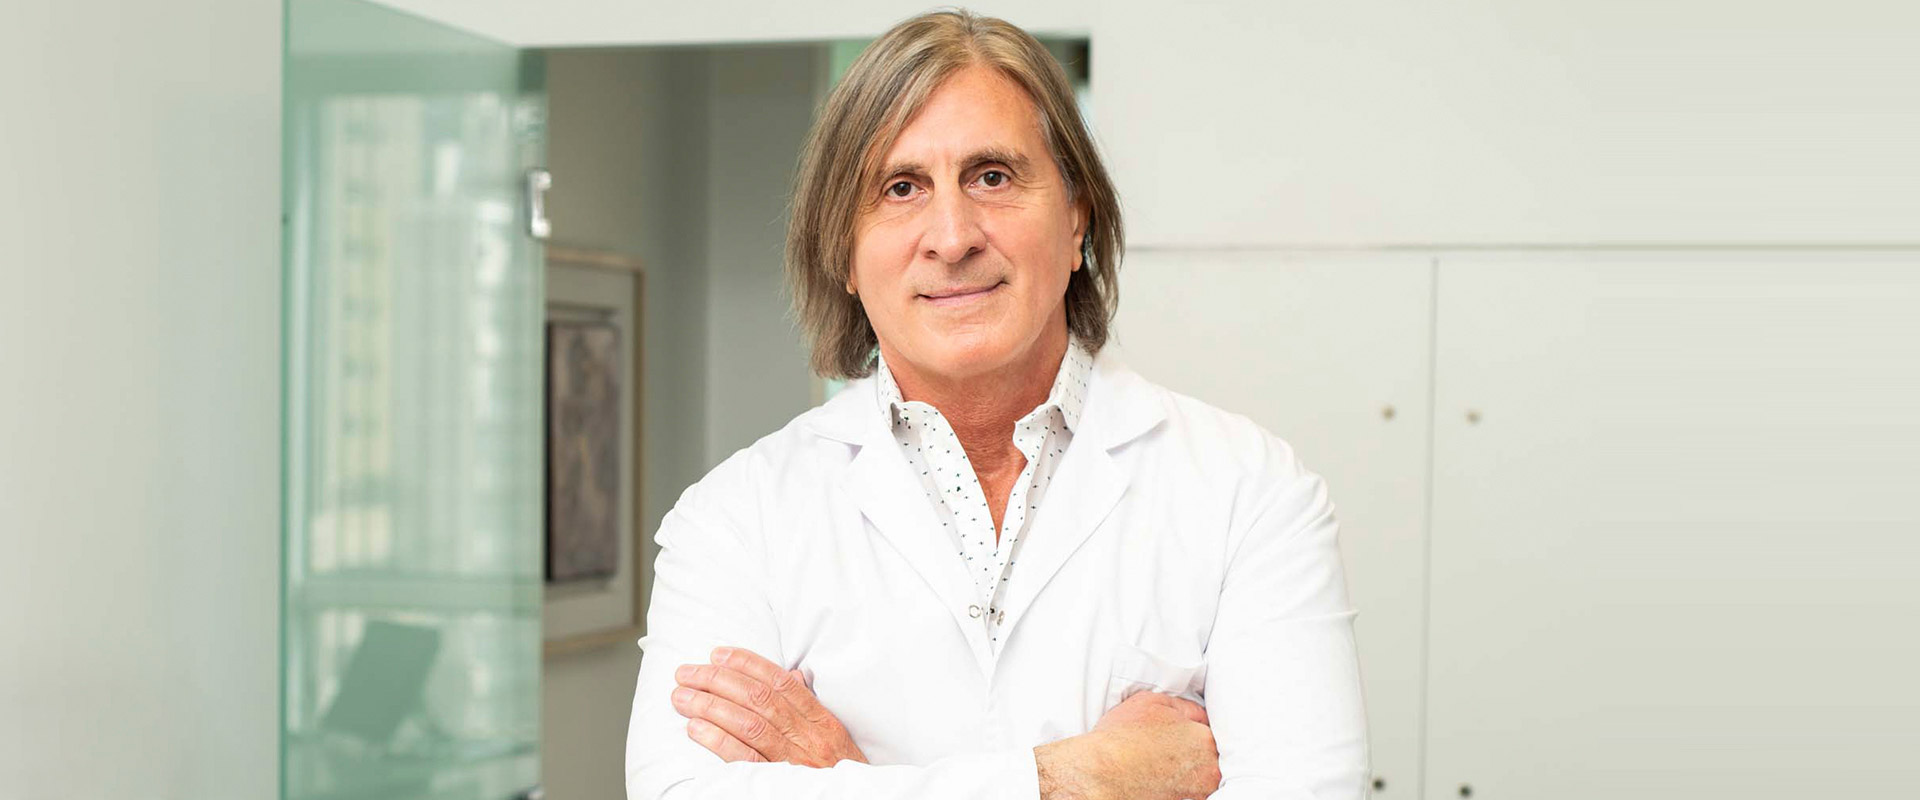 Dr Humberto Dionisi Cordoba Argentina - Ginecologo y Cirujano Ginecologico - Especialista en Endometriosis y Laparoscopia